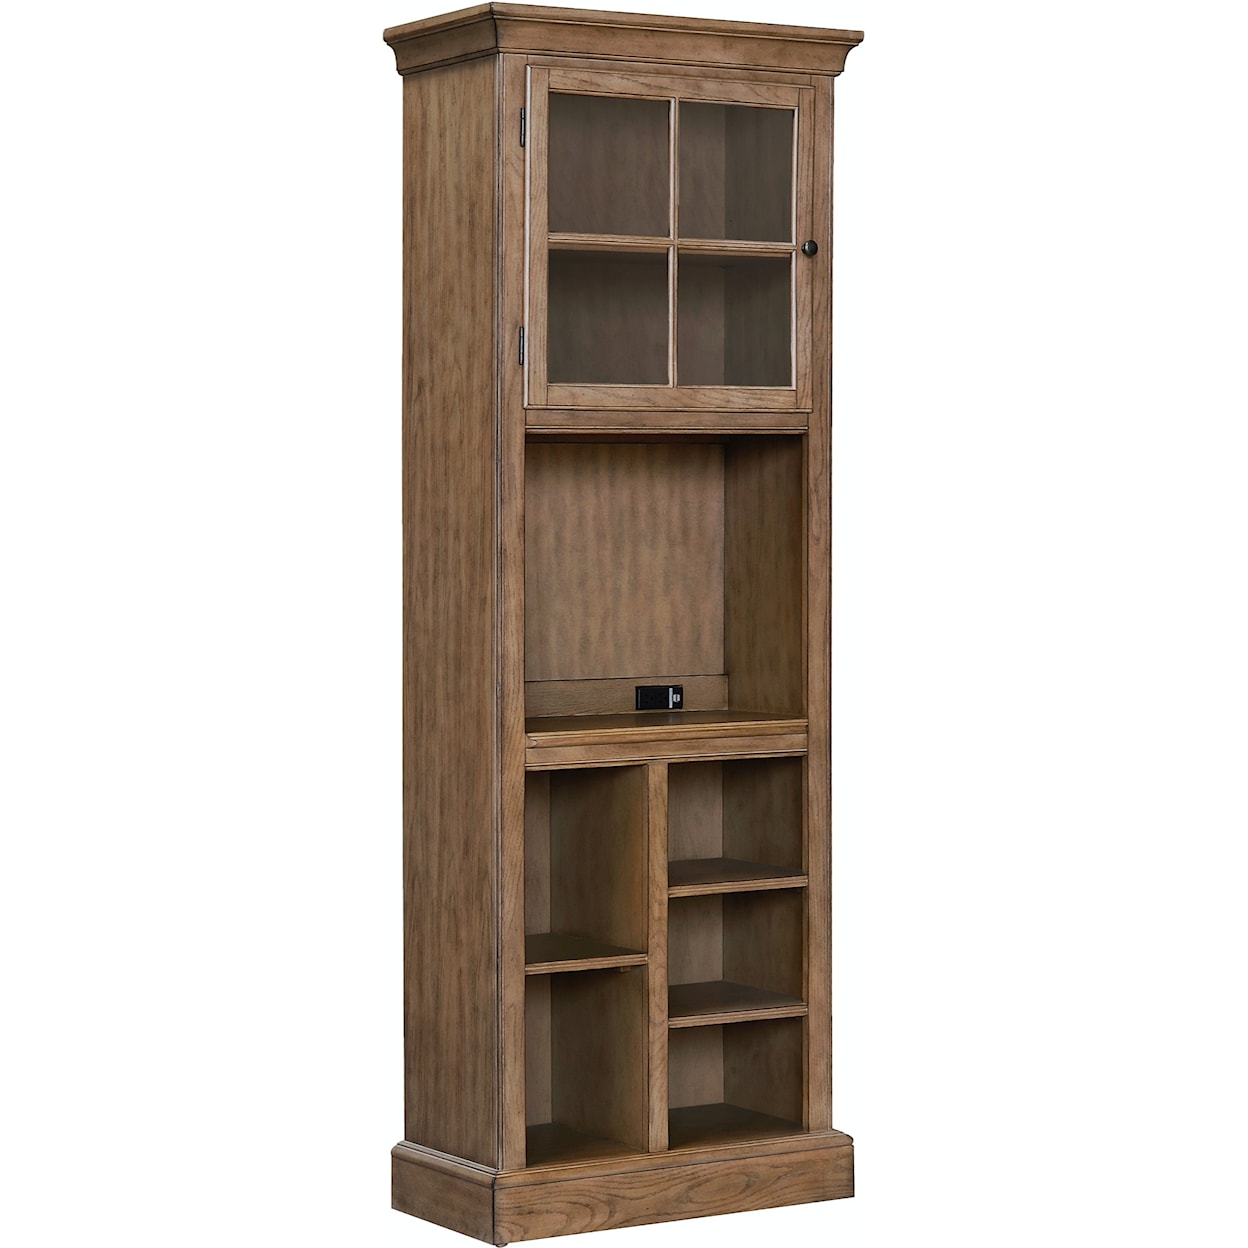 Pulaski Furniture Accents Collection Kitchen Cabinet